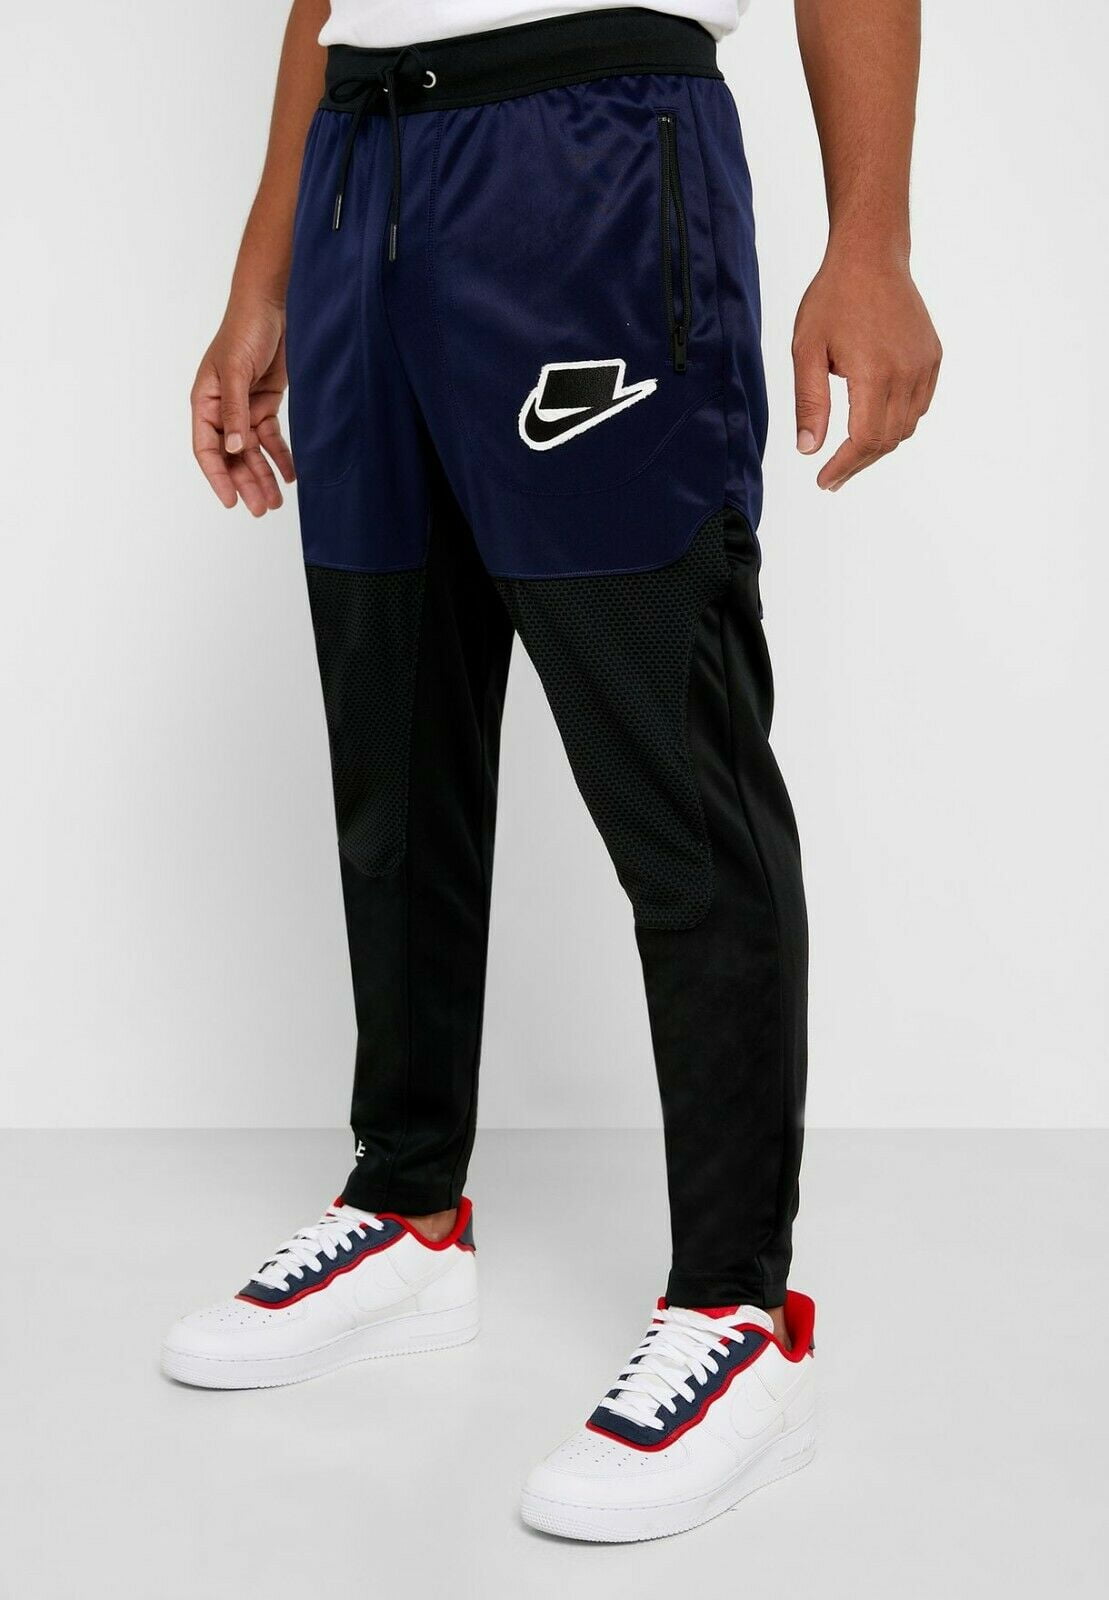 Oferta Centelleo Contratación Nike NSW NSP Black/Blue Men's Loose Fit Track Pants Size M - Walmart.com